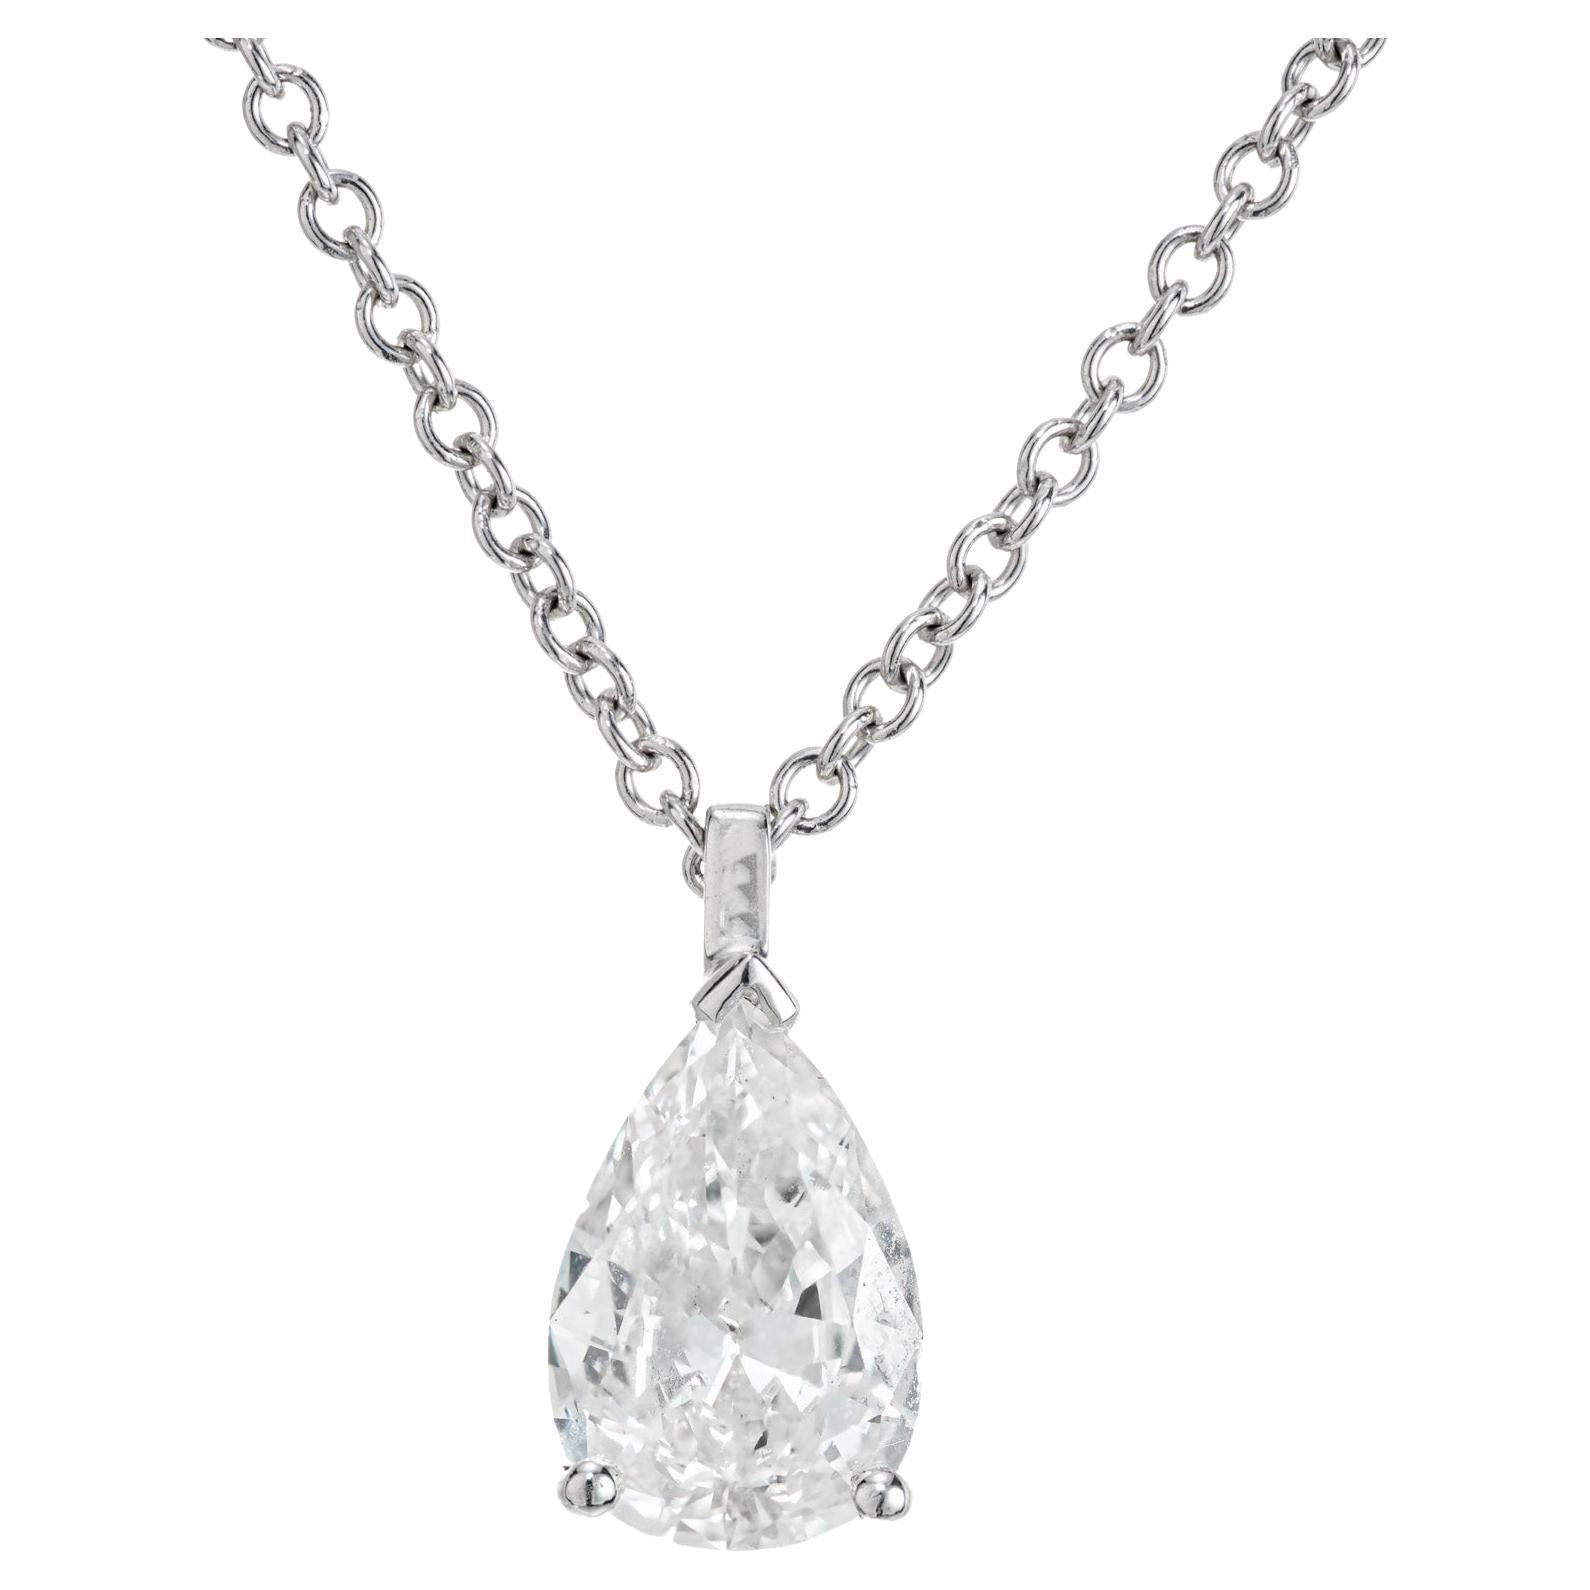 Peter Suchy .81 Carat Diamond White Gold Pendant Necklace 